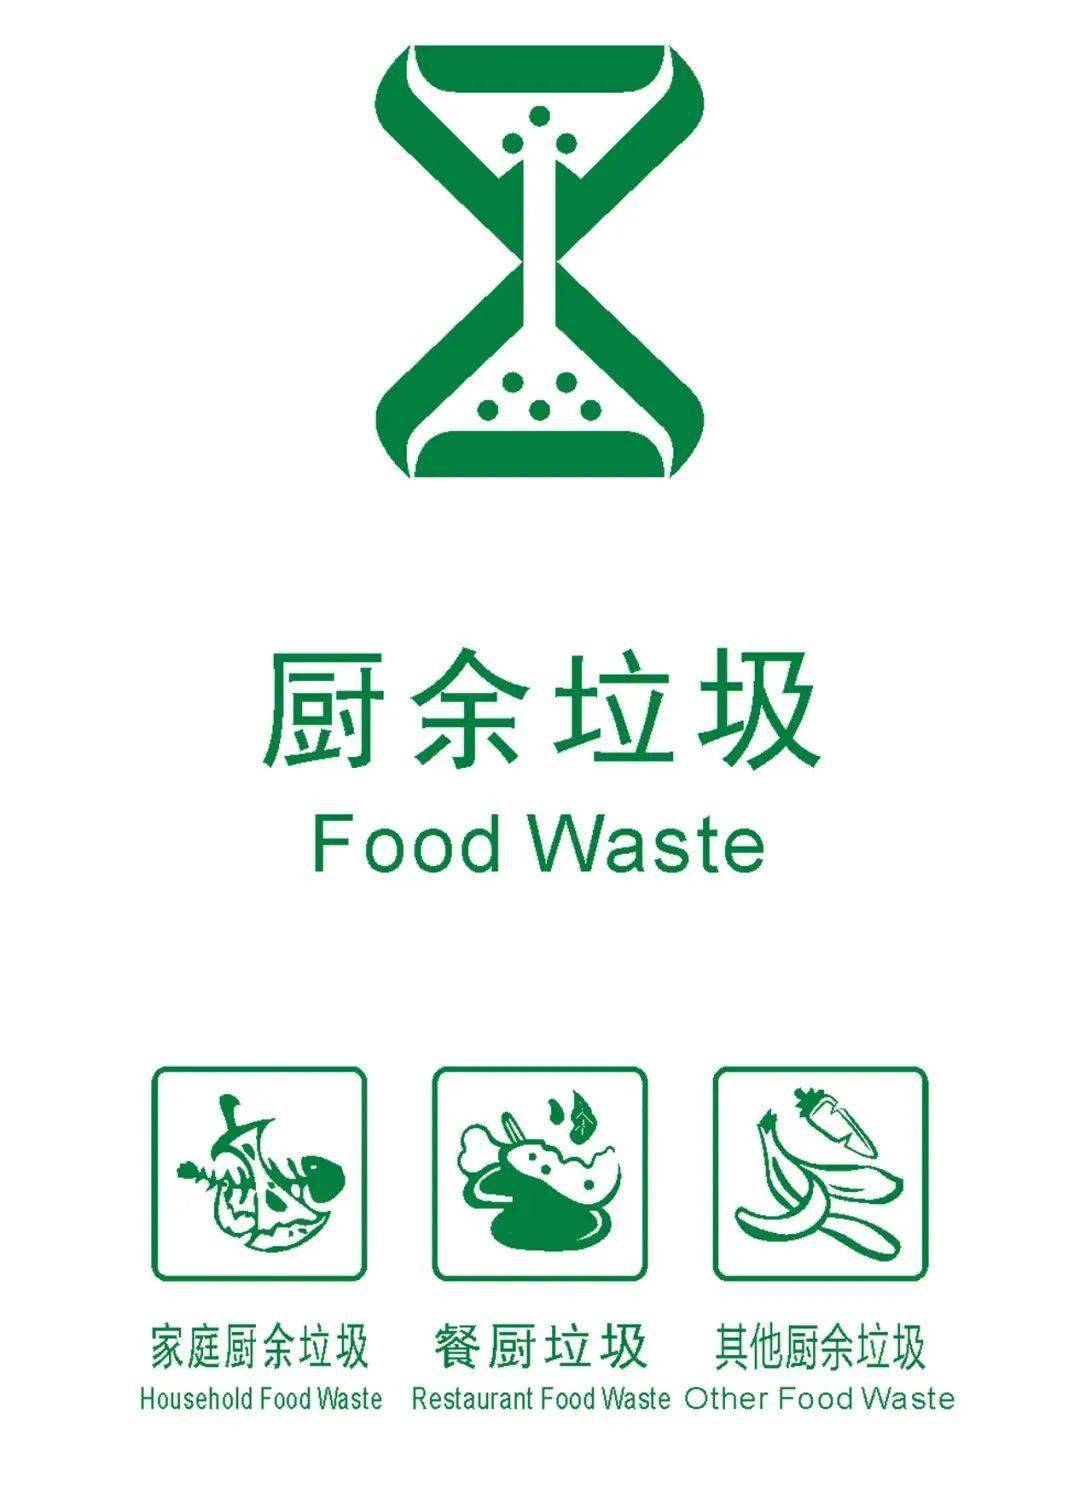 hazardous waste 表示《 国家危险废物名录 》中的家庭源危险废物